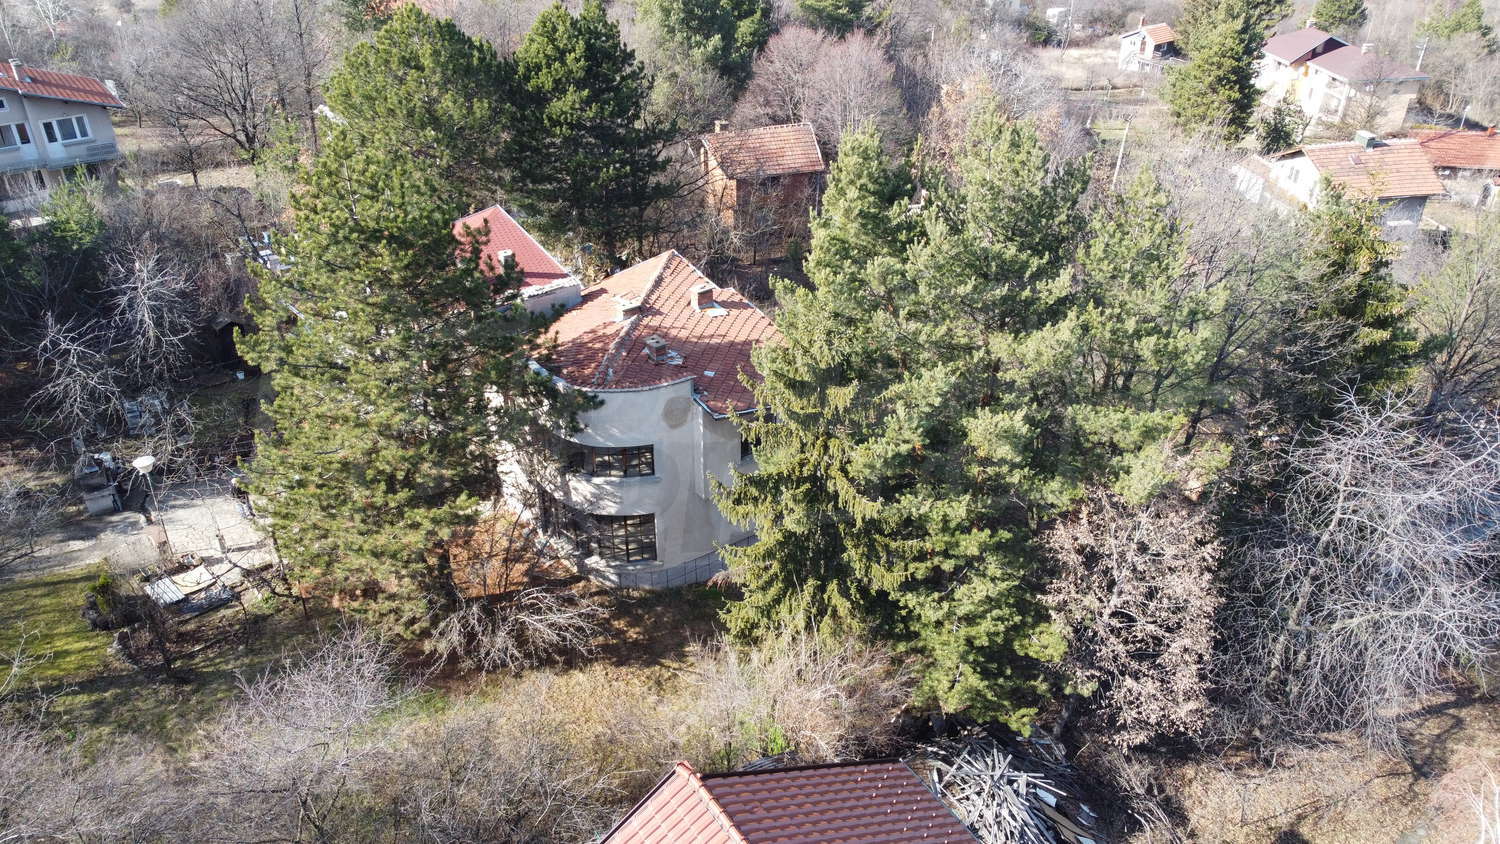 Family semi-detached house with a garden in a villa zone near Sofia